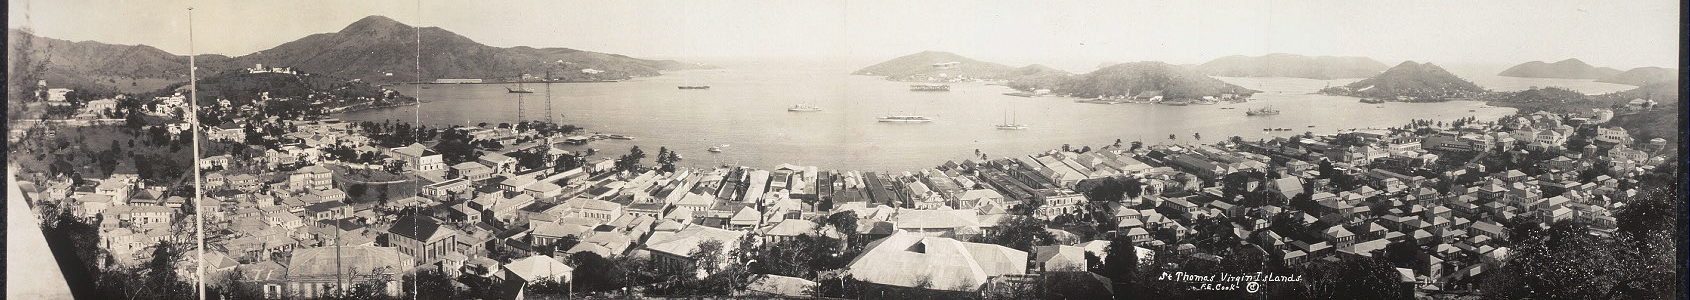 Black and white panorama photograph of St. Thomas